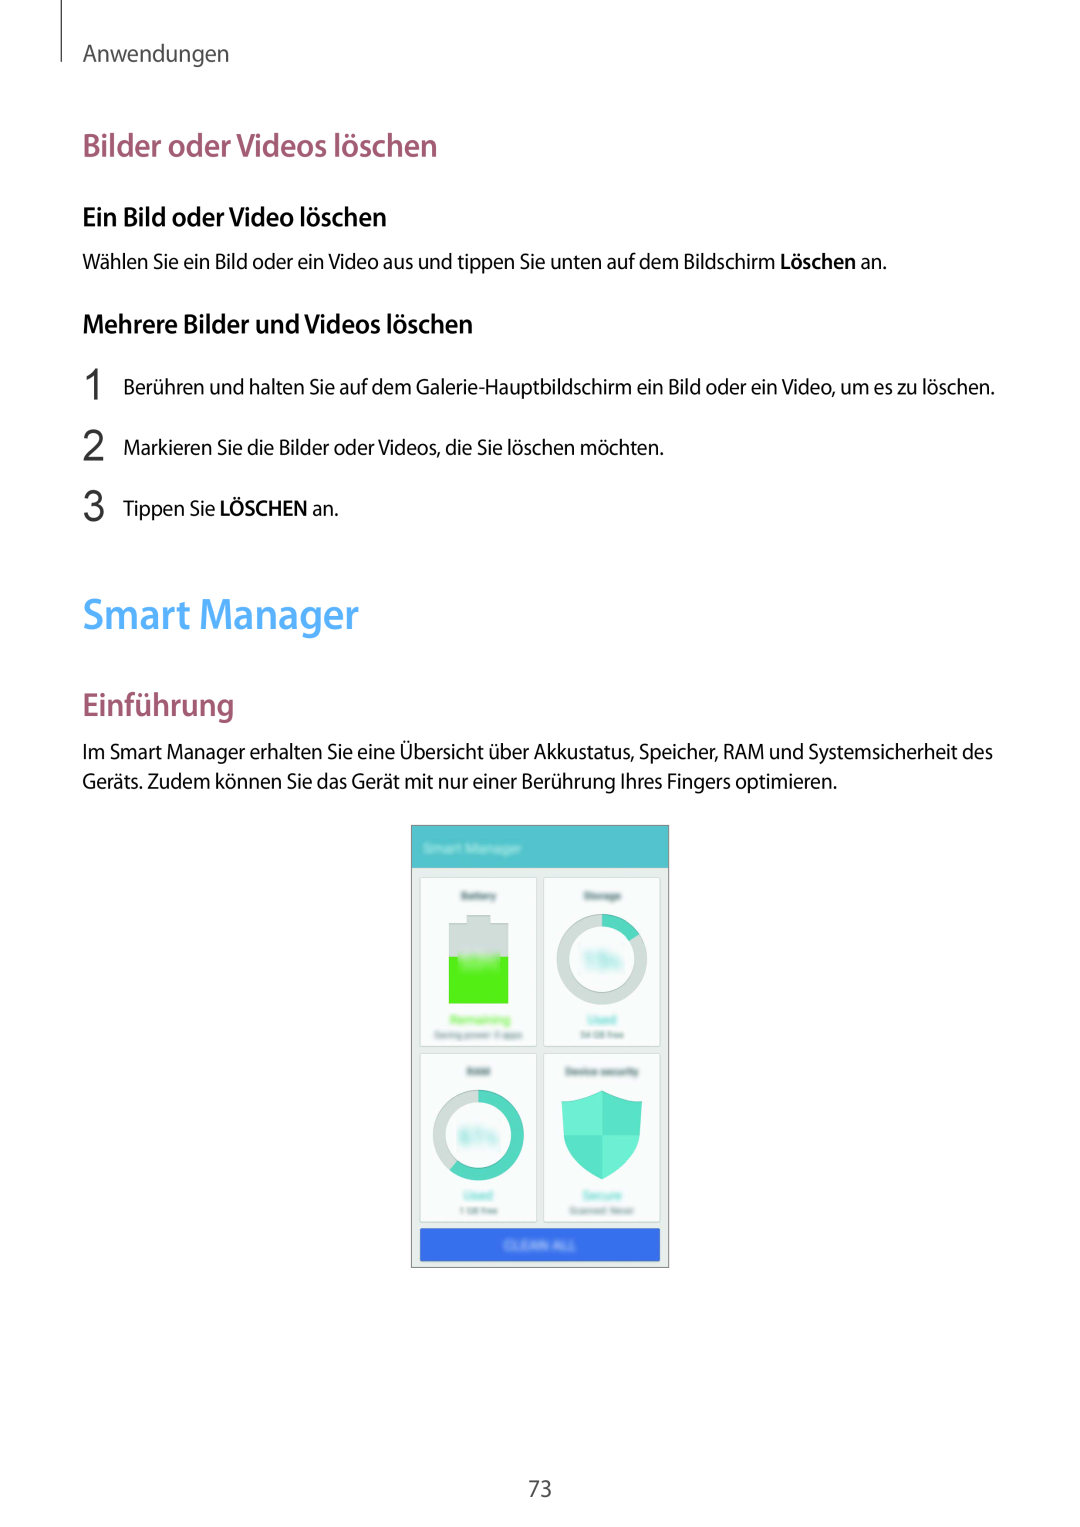 Samsung SM-G920FZKEDBT Smart Manager, Bilder oder Videos löschen, Ein Bild oder Video löschen, Einführung, Anwendungen 